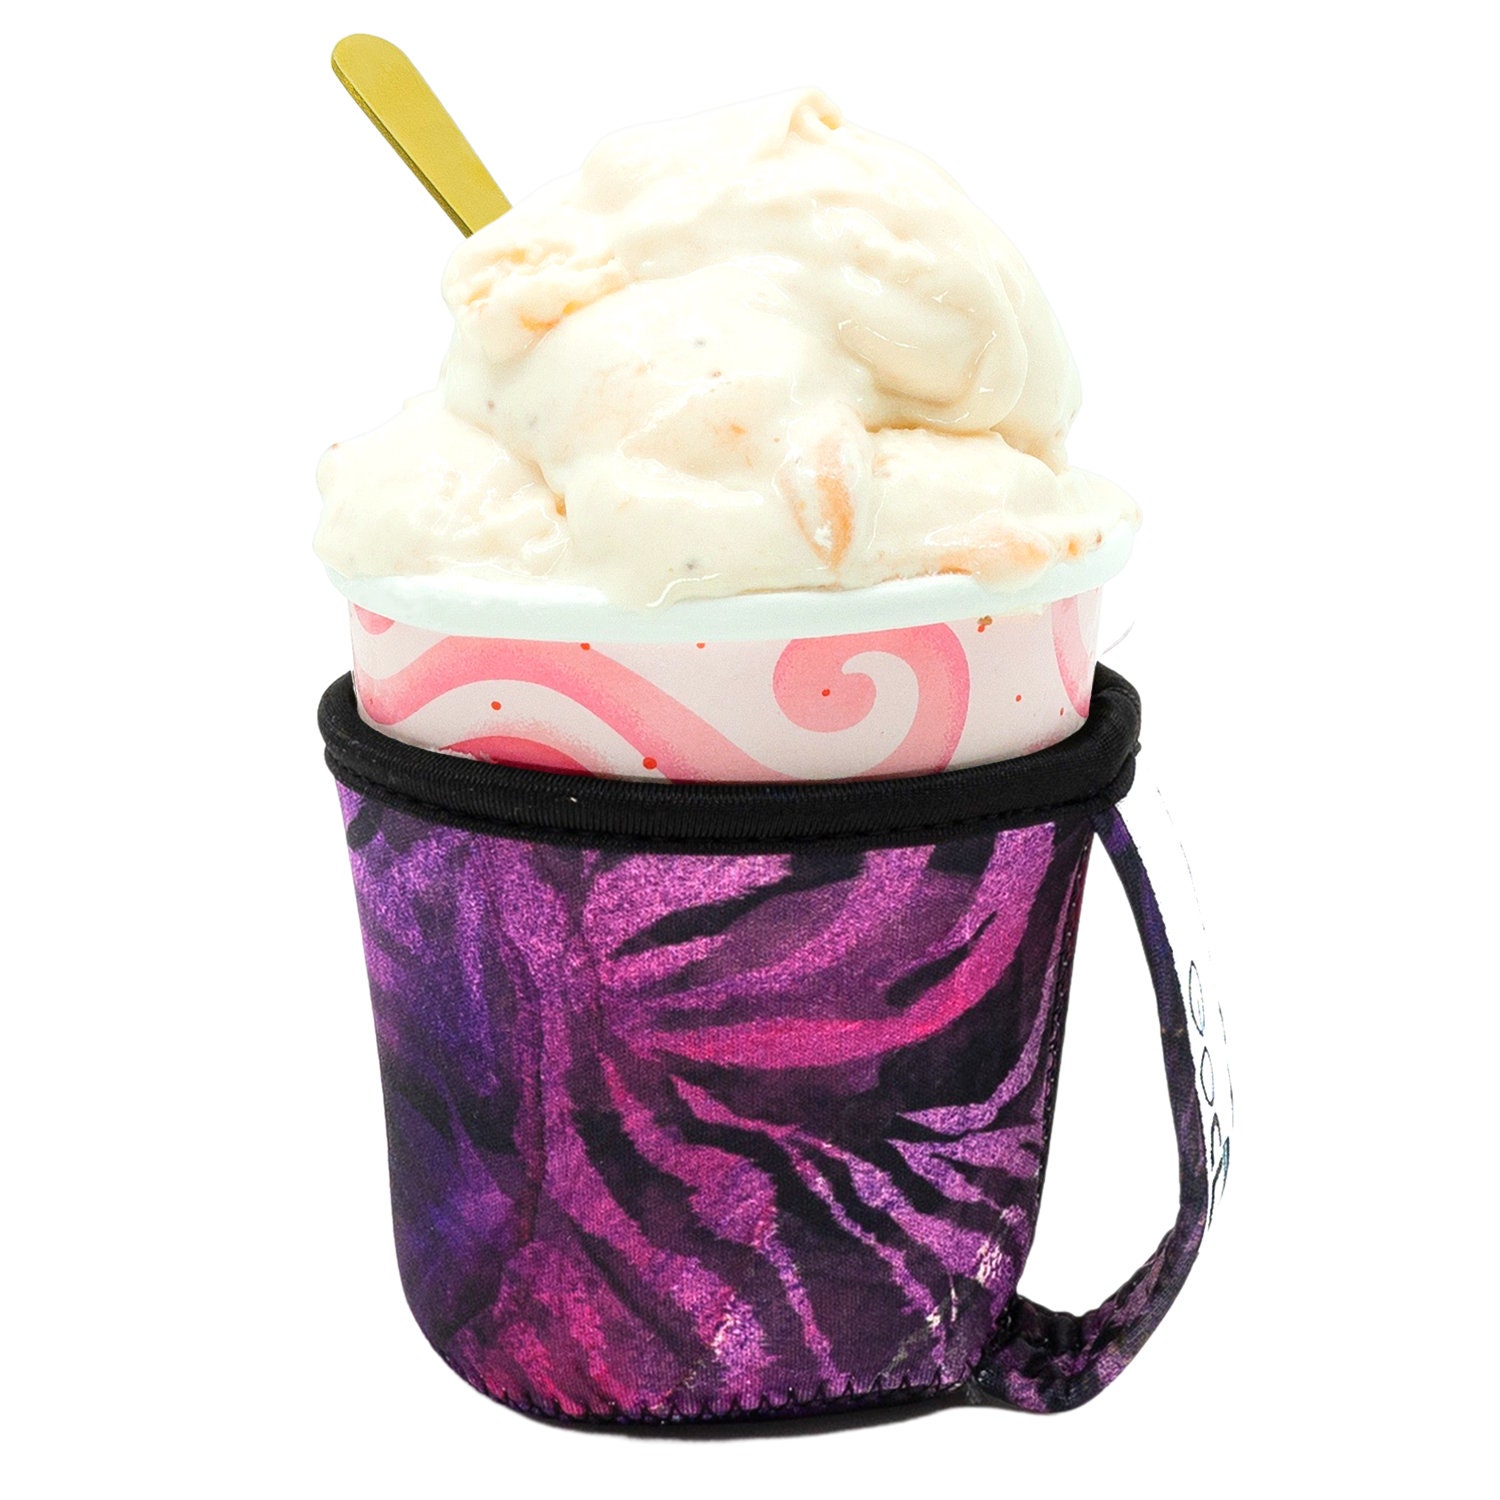 Ice Cream Wishes & Mistletoe Kisses Blue Ice Cream Pint Cooler